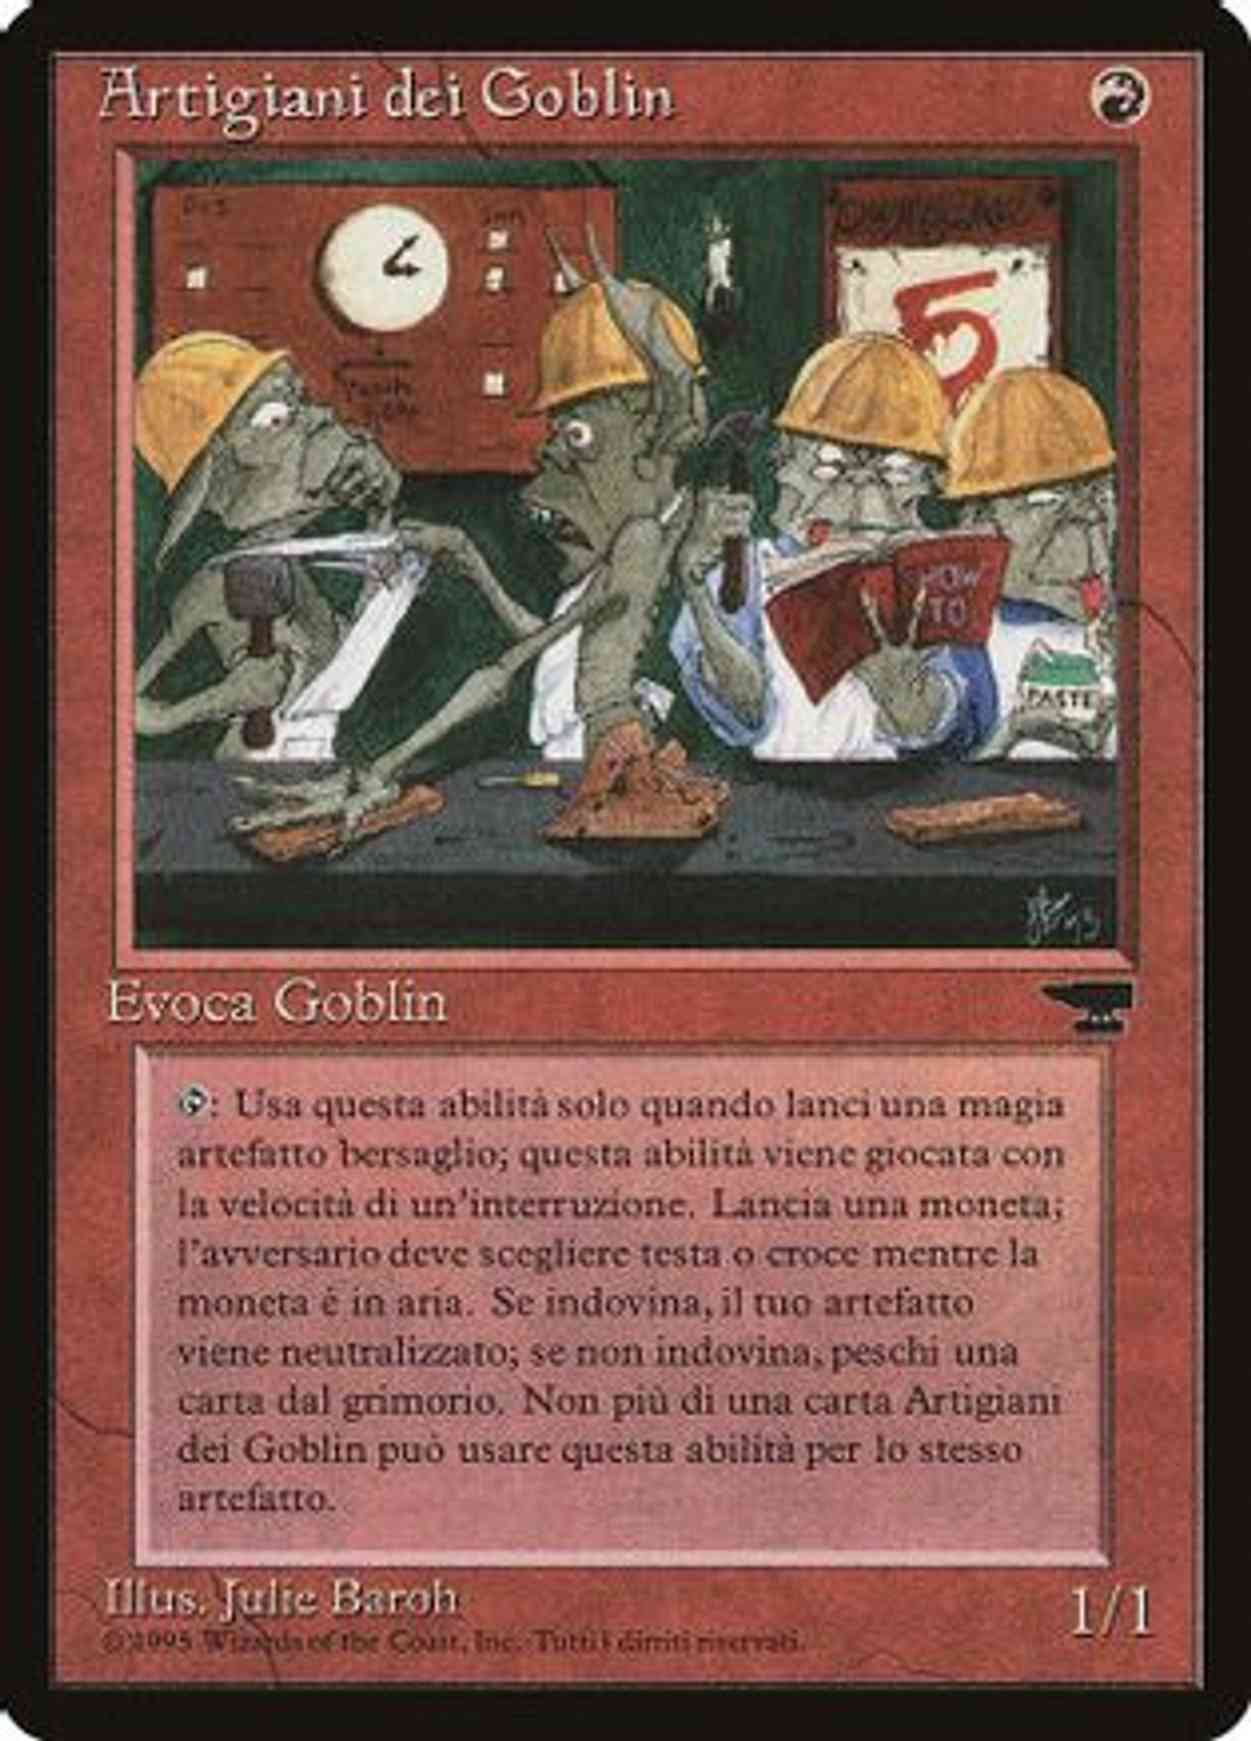 Goblin Artisans (Italian) - "Artigiani dei Goblin" magic card front